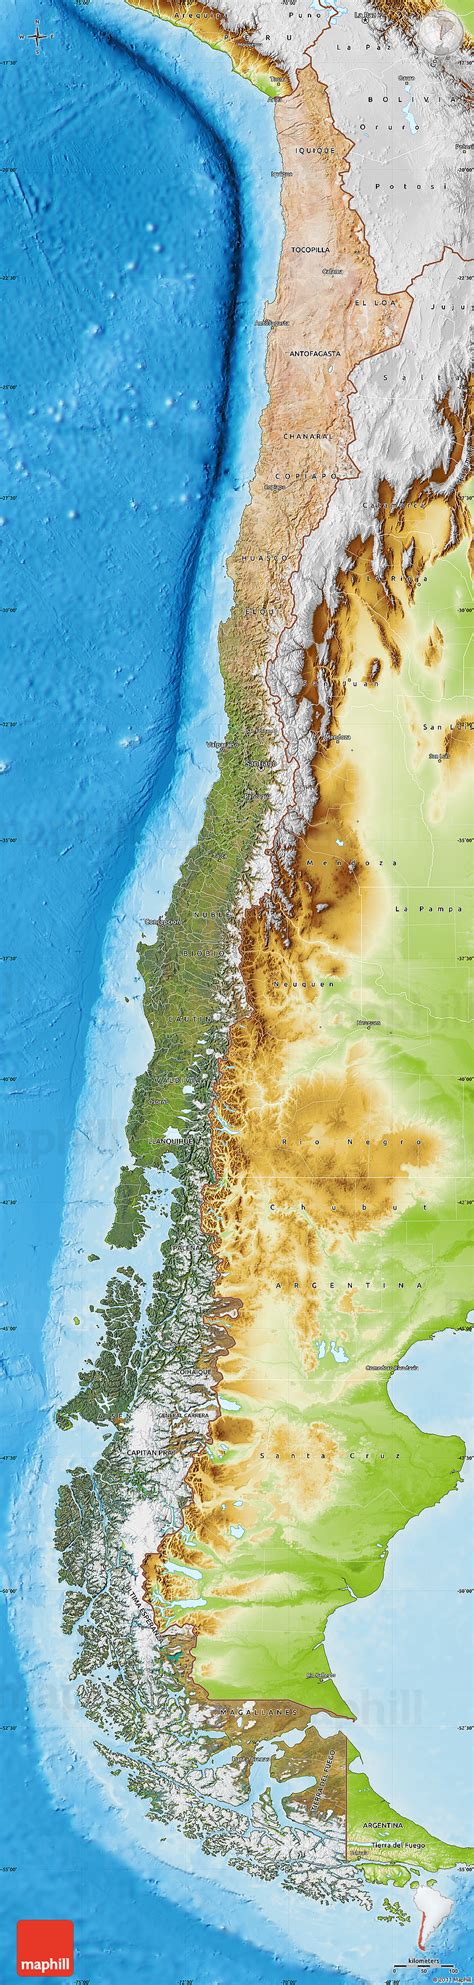 Chile Satelliten Karte